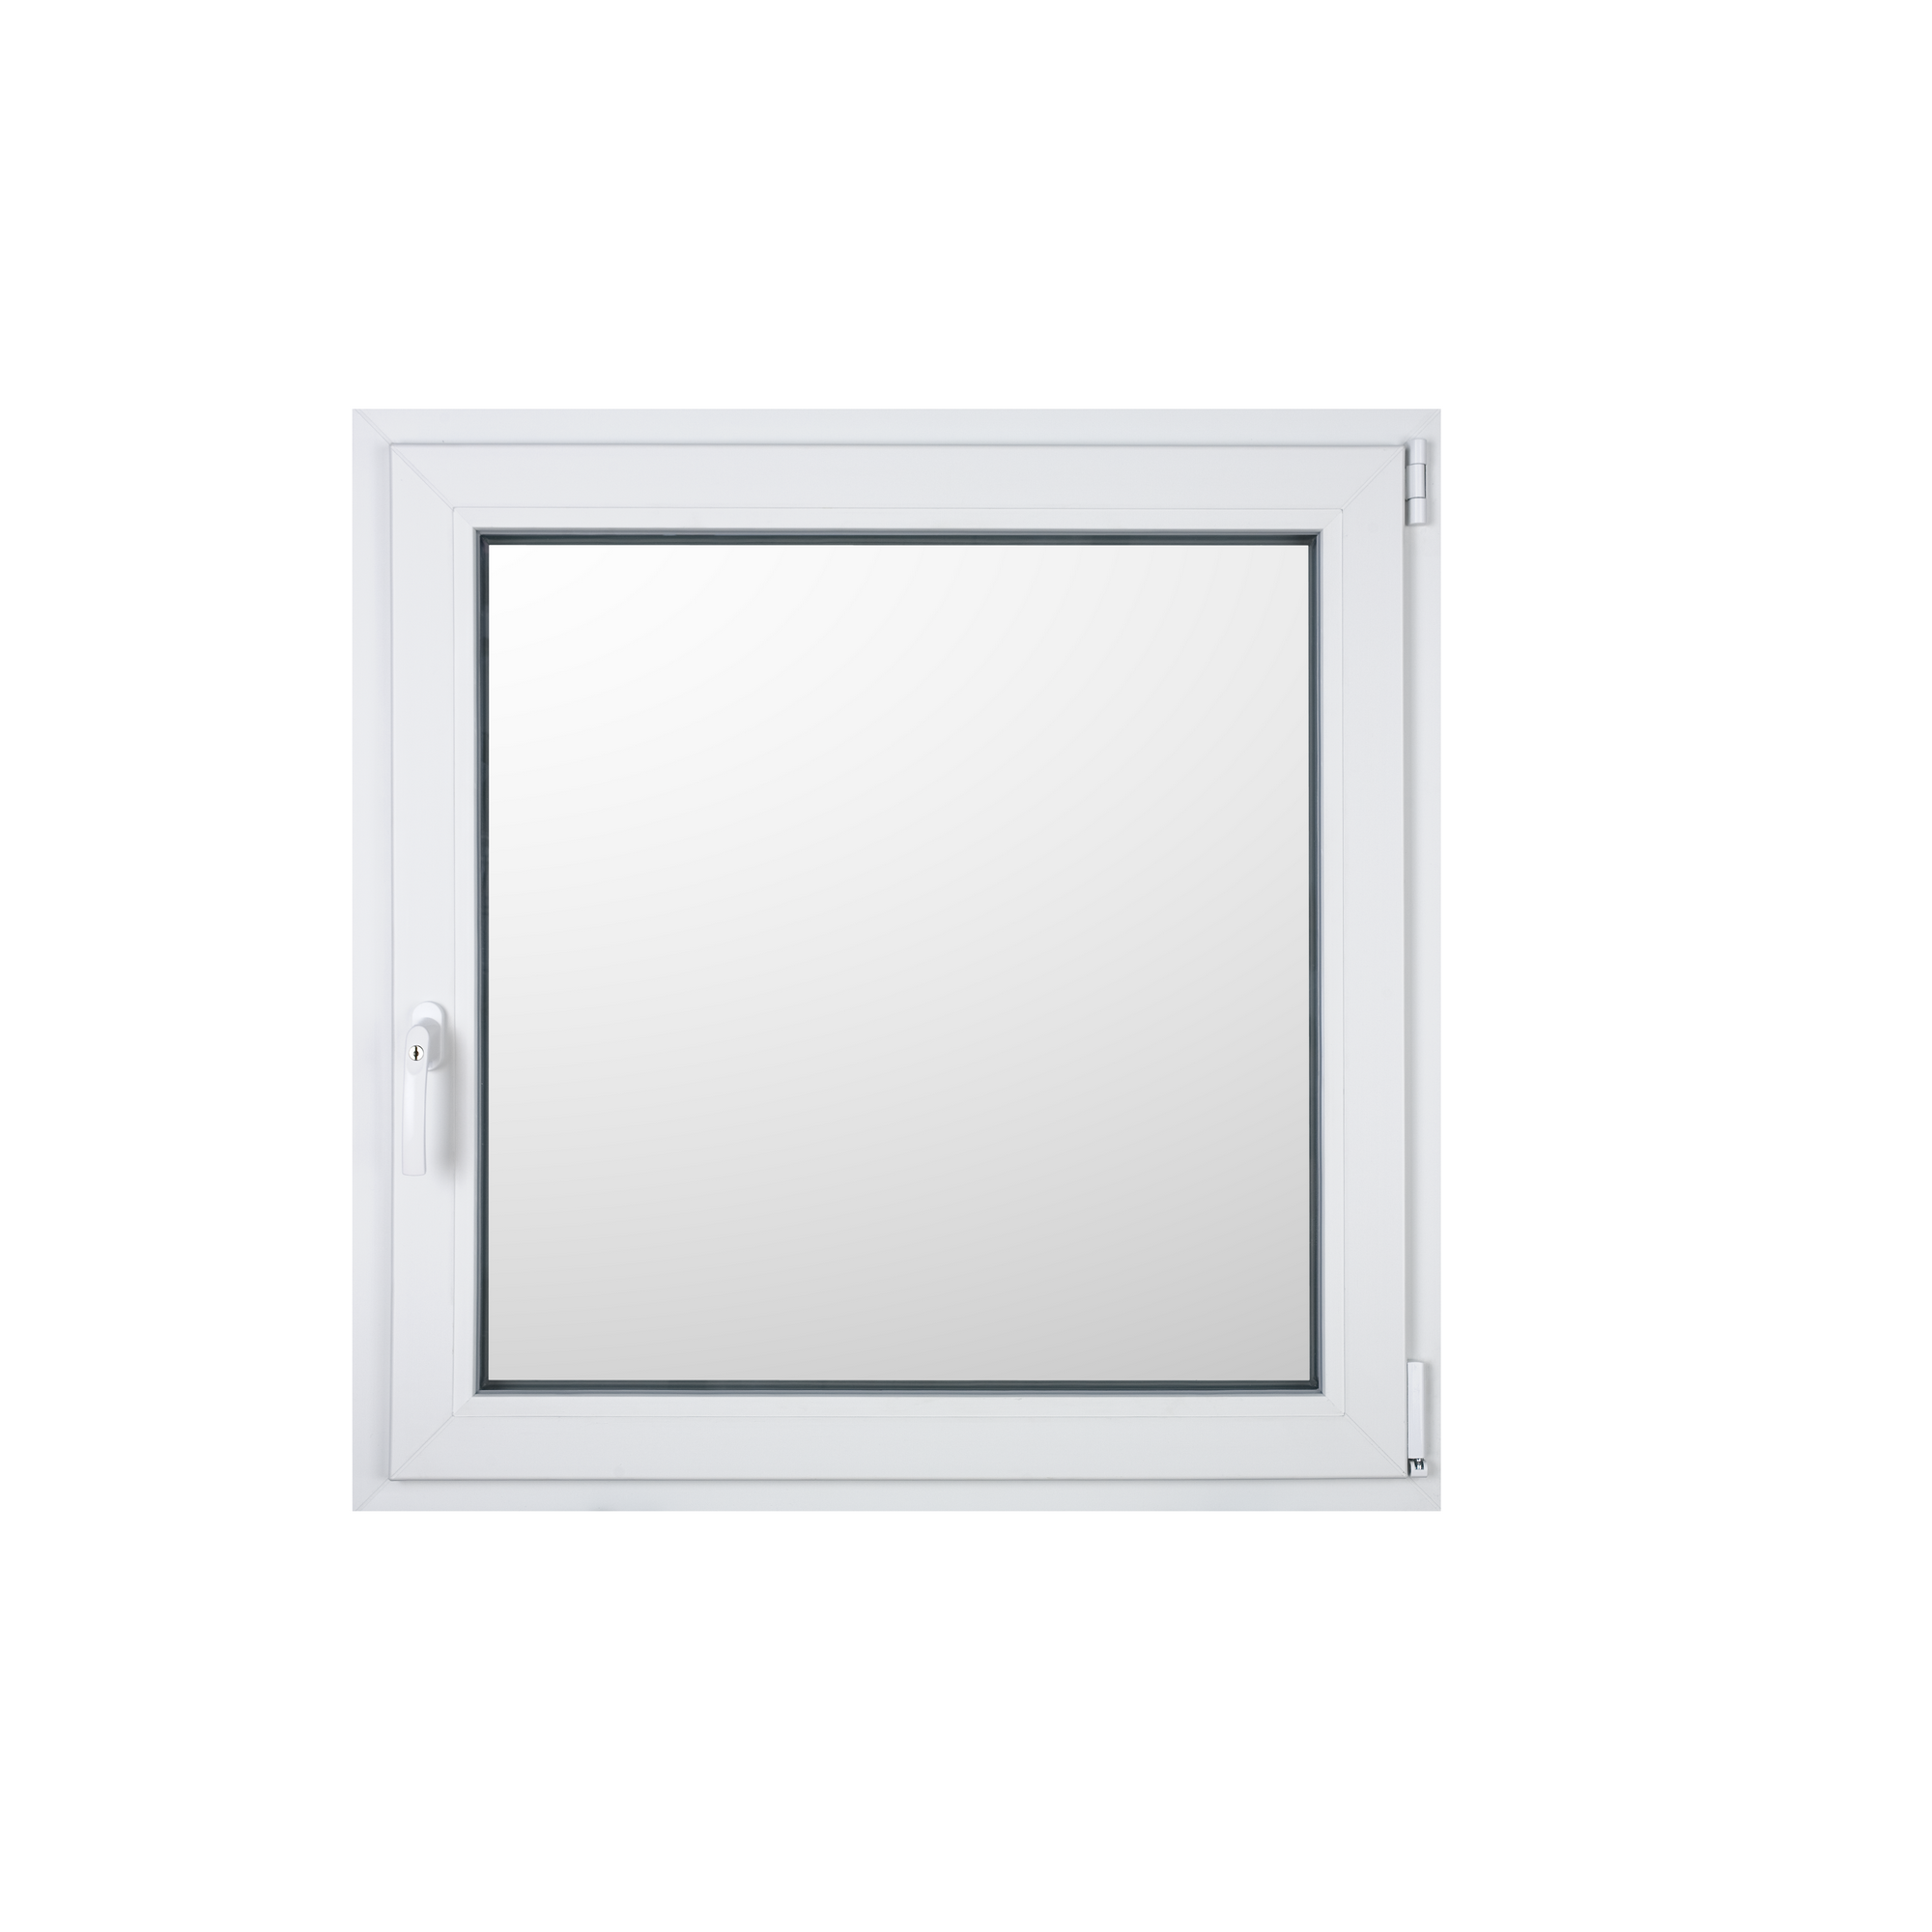 Sicherheitsfenster 'FL 700A RC2'  100 x 100 cm LS + product picture